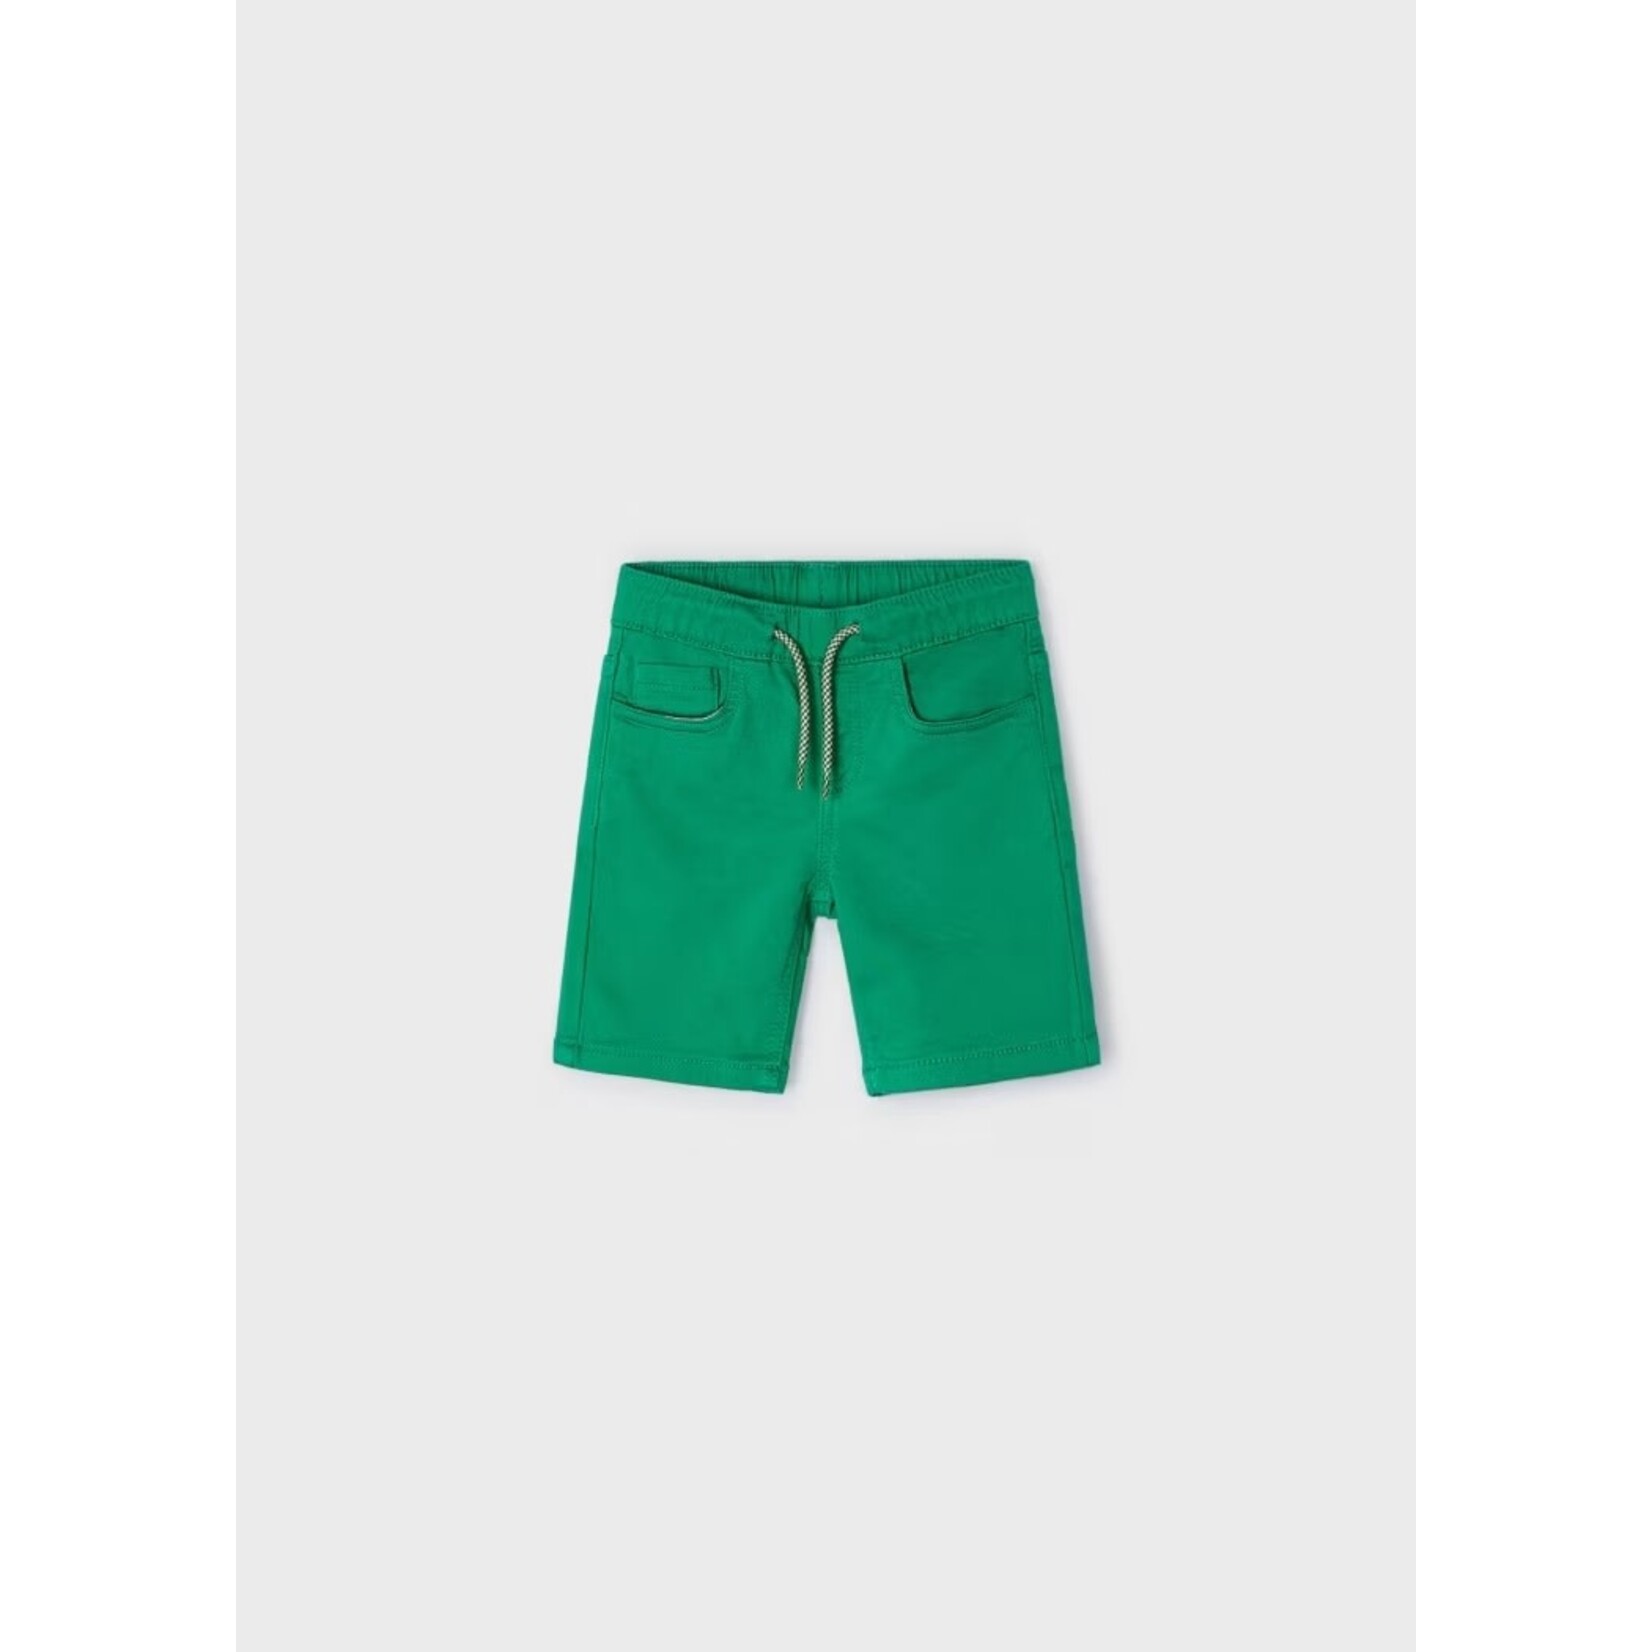 Mayoral MAYORAL - Chlorophyll green twill cotton shorts